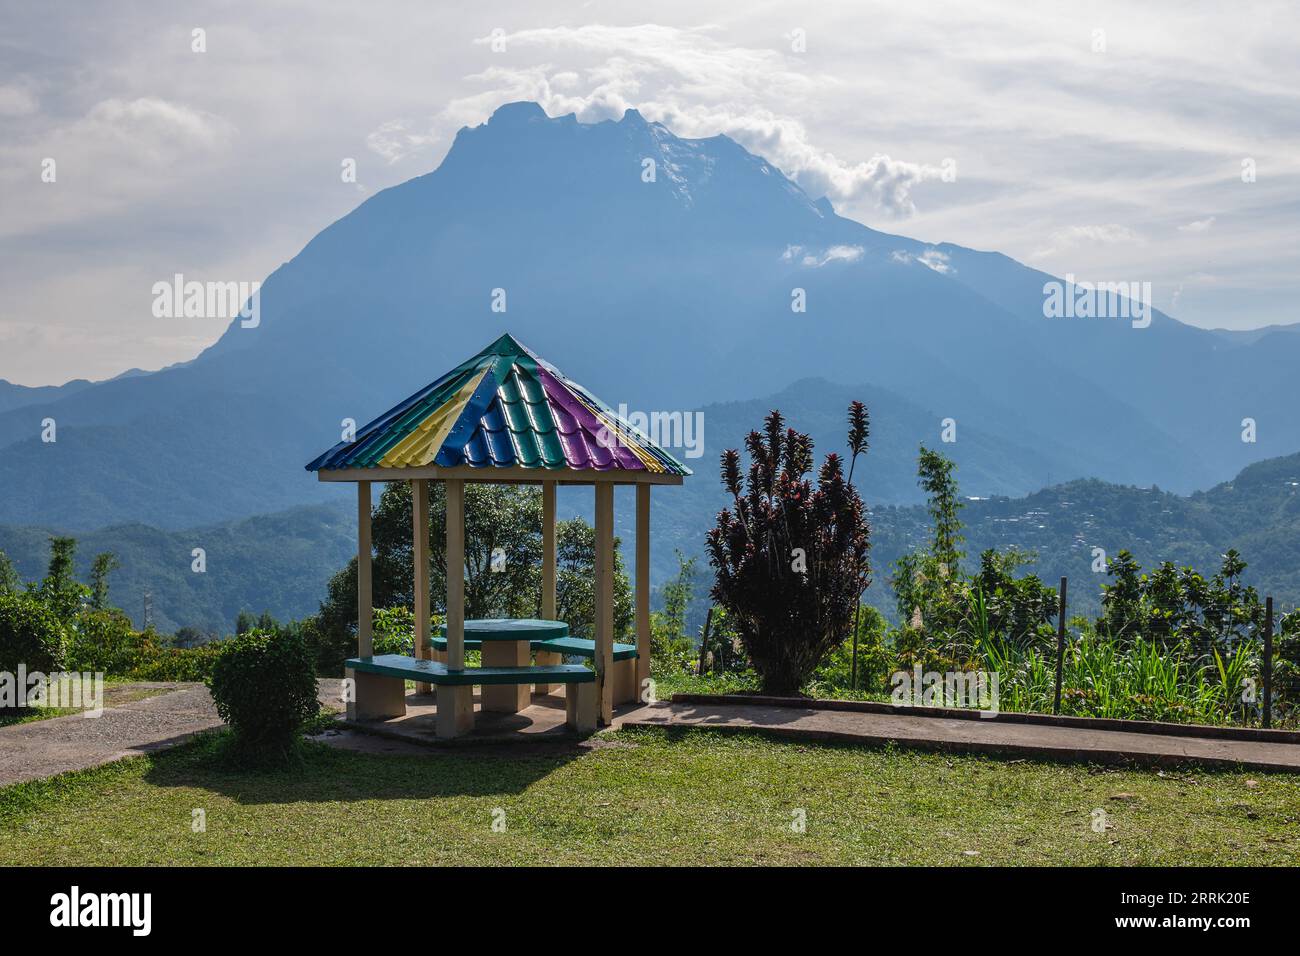 Scenery of Mount Kinabalu, the highest mountain in Borneo and Malaysia. Stock Photo